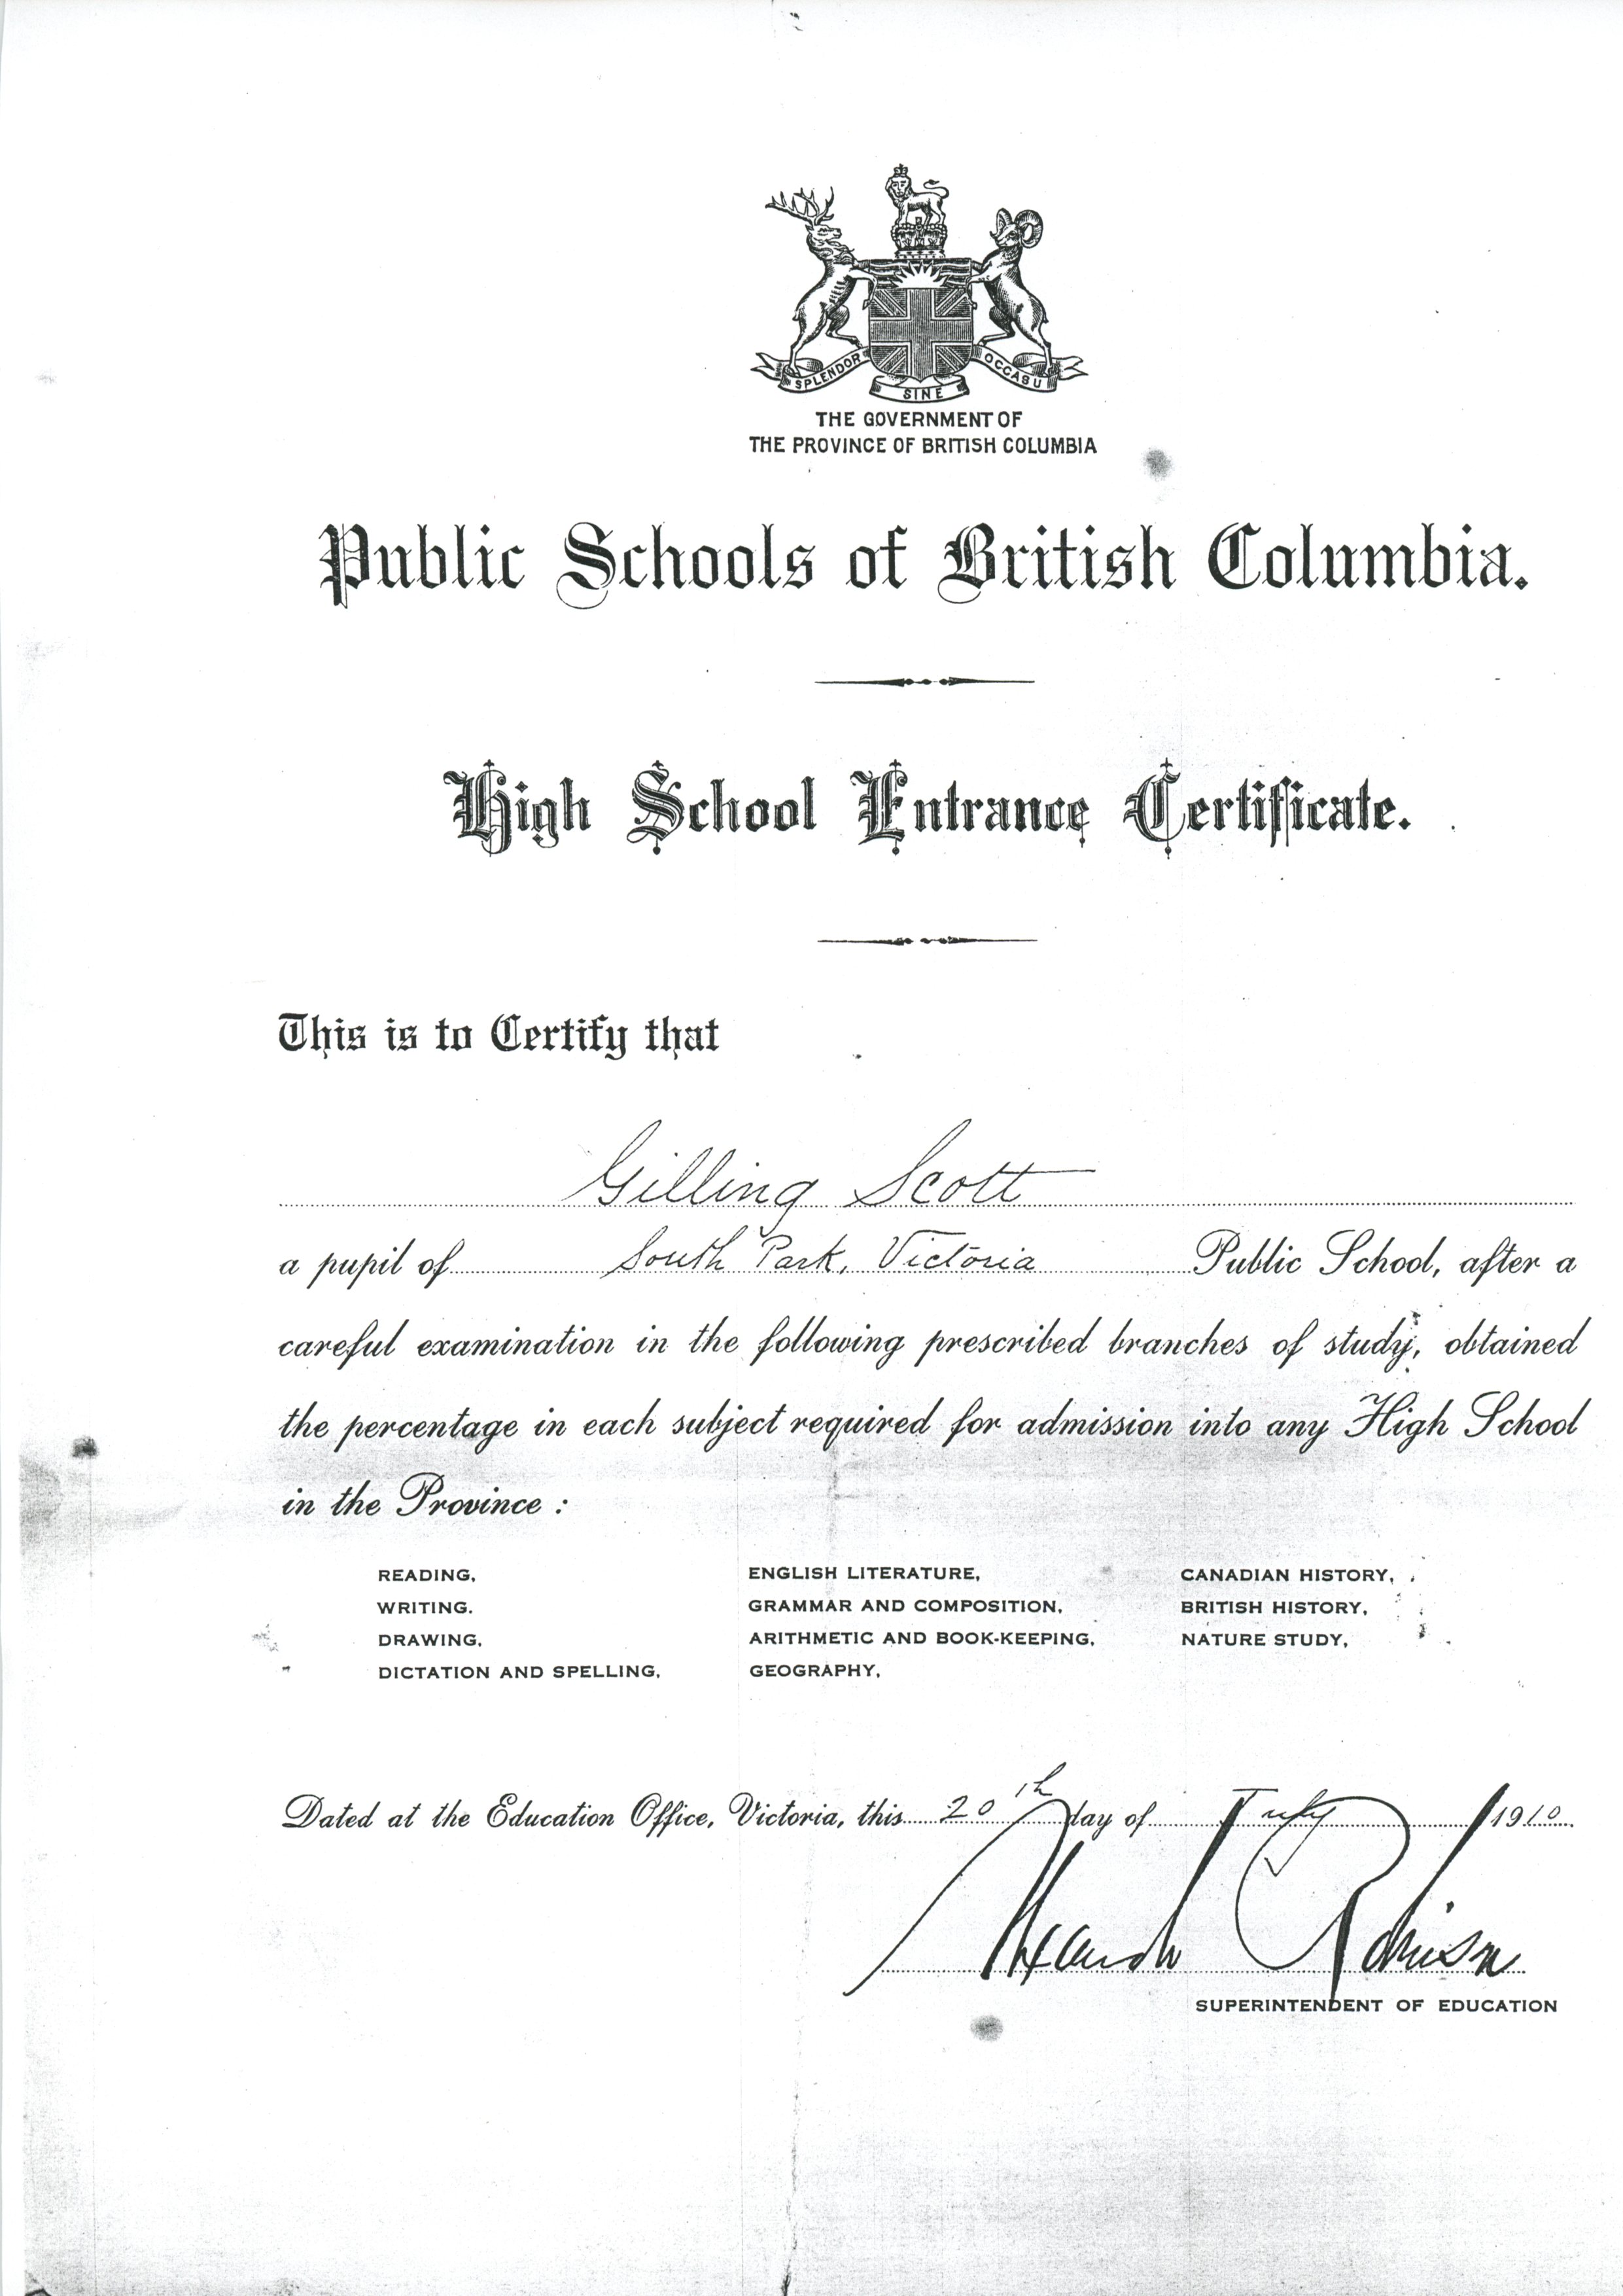 High School Entrance Certificate